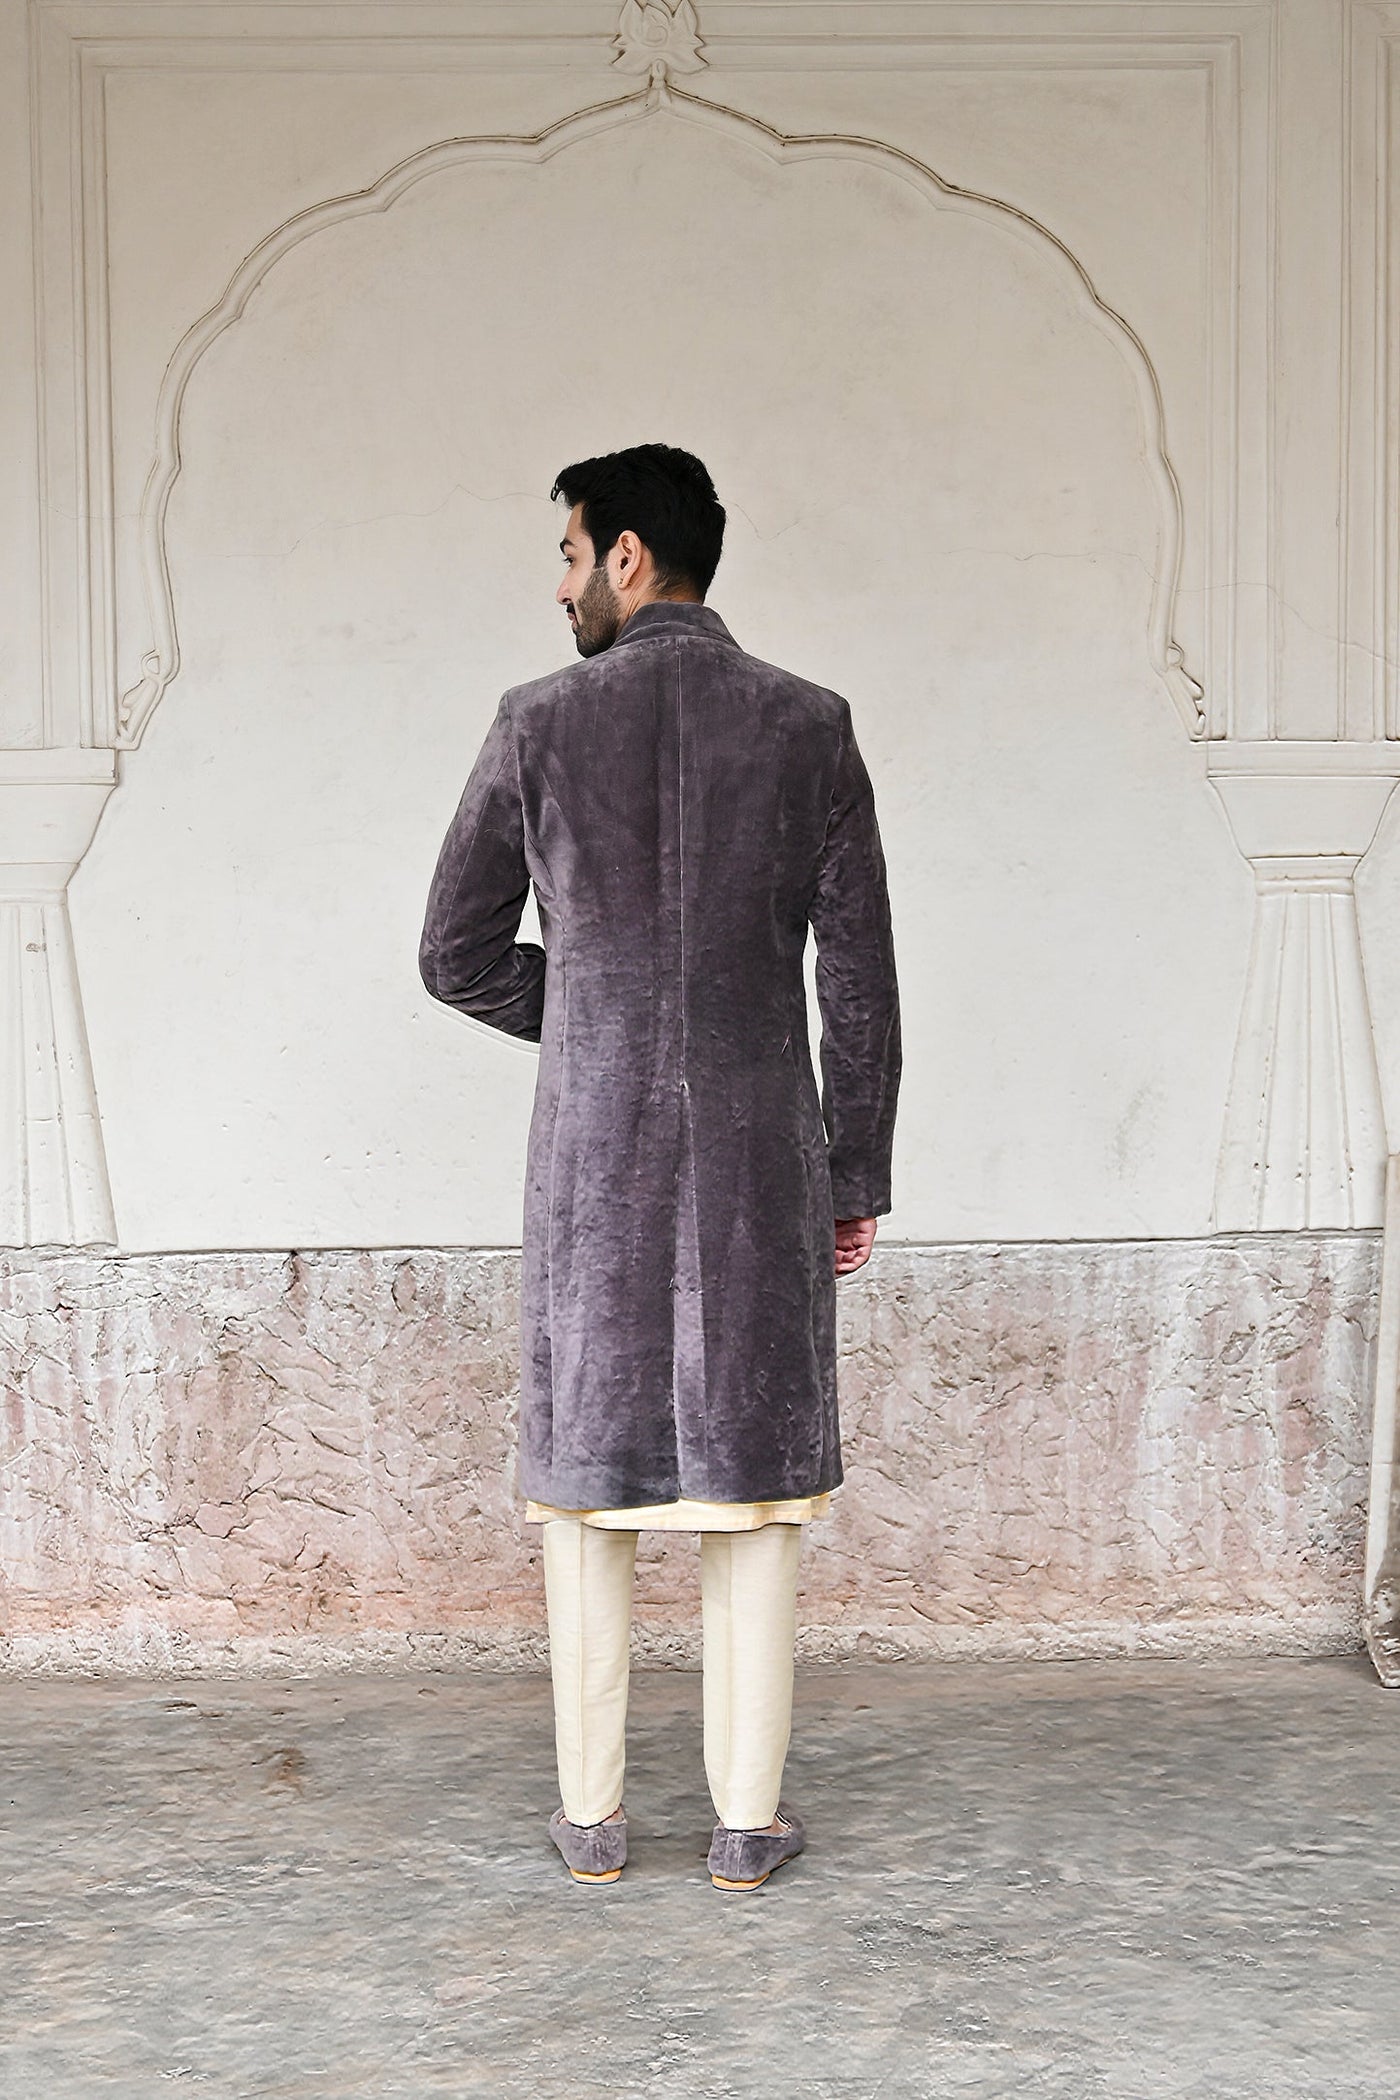 Shop for designer overcoats for men in India